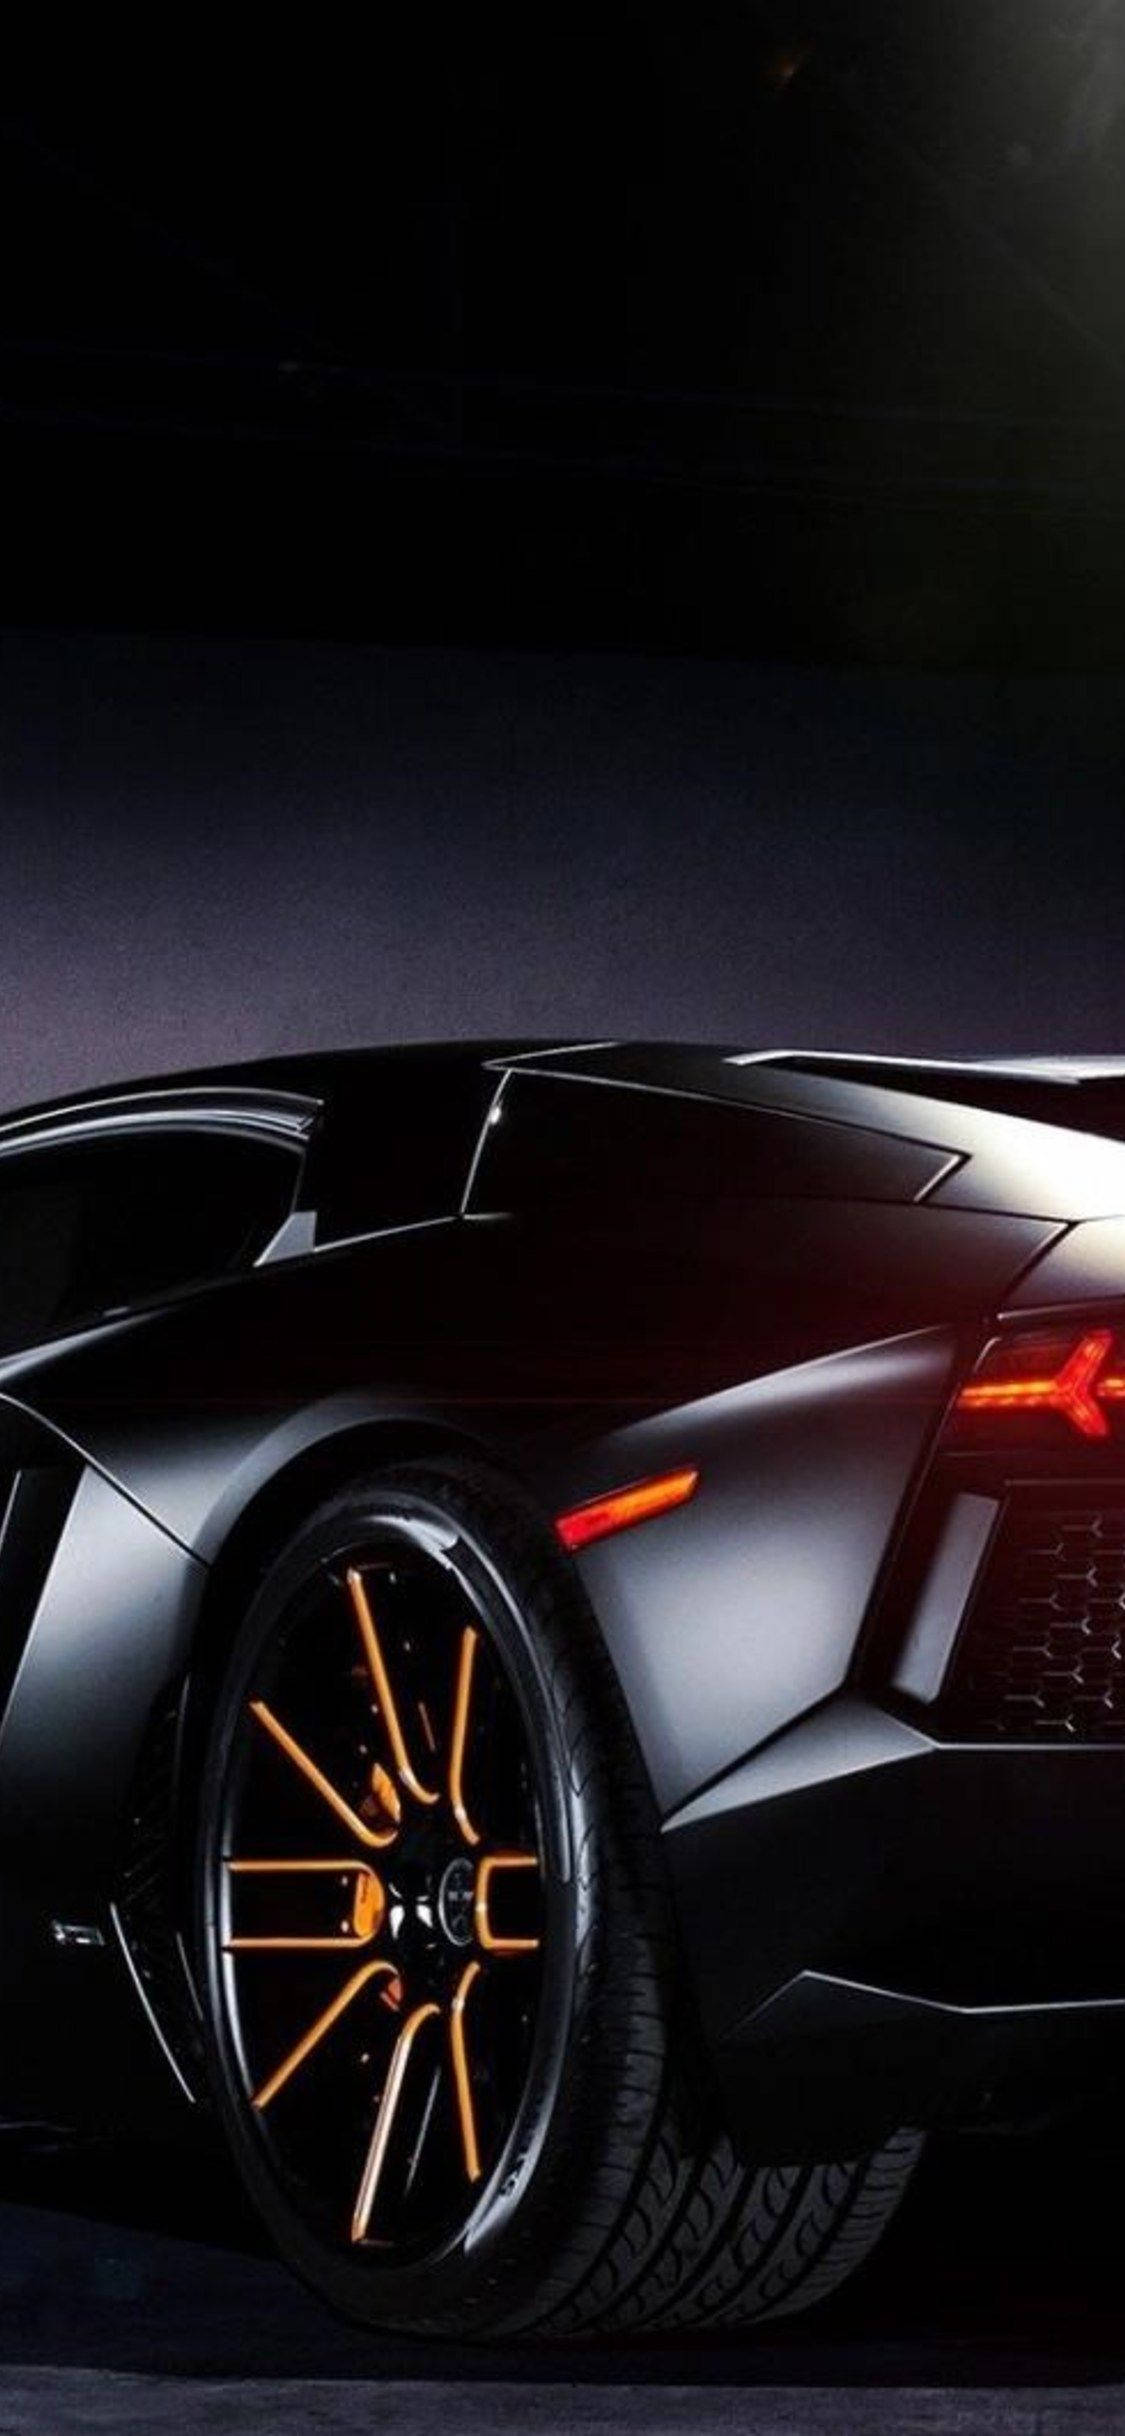 Awesome Iphone Lamborghini Theme Wallpaper